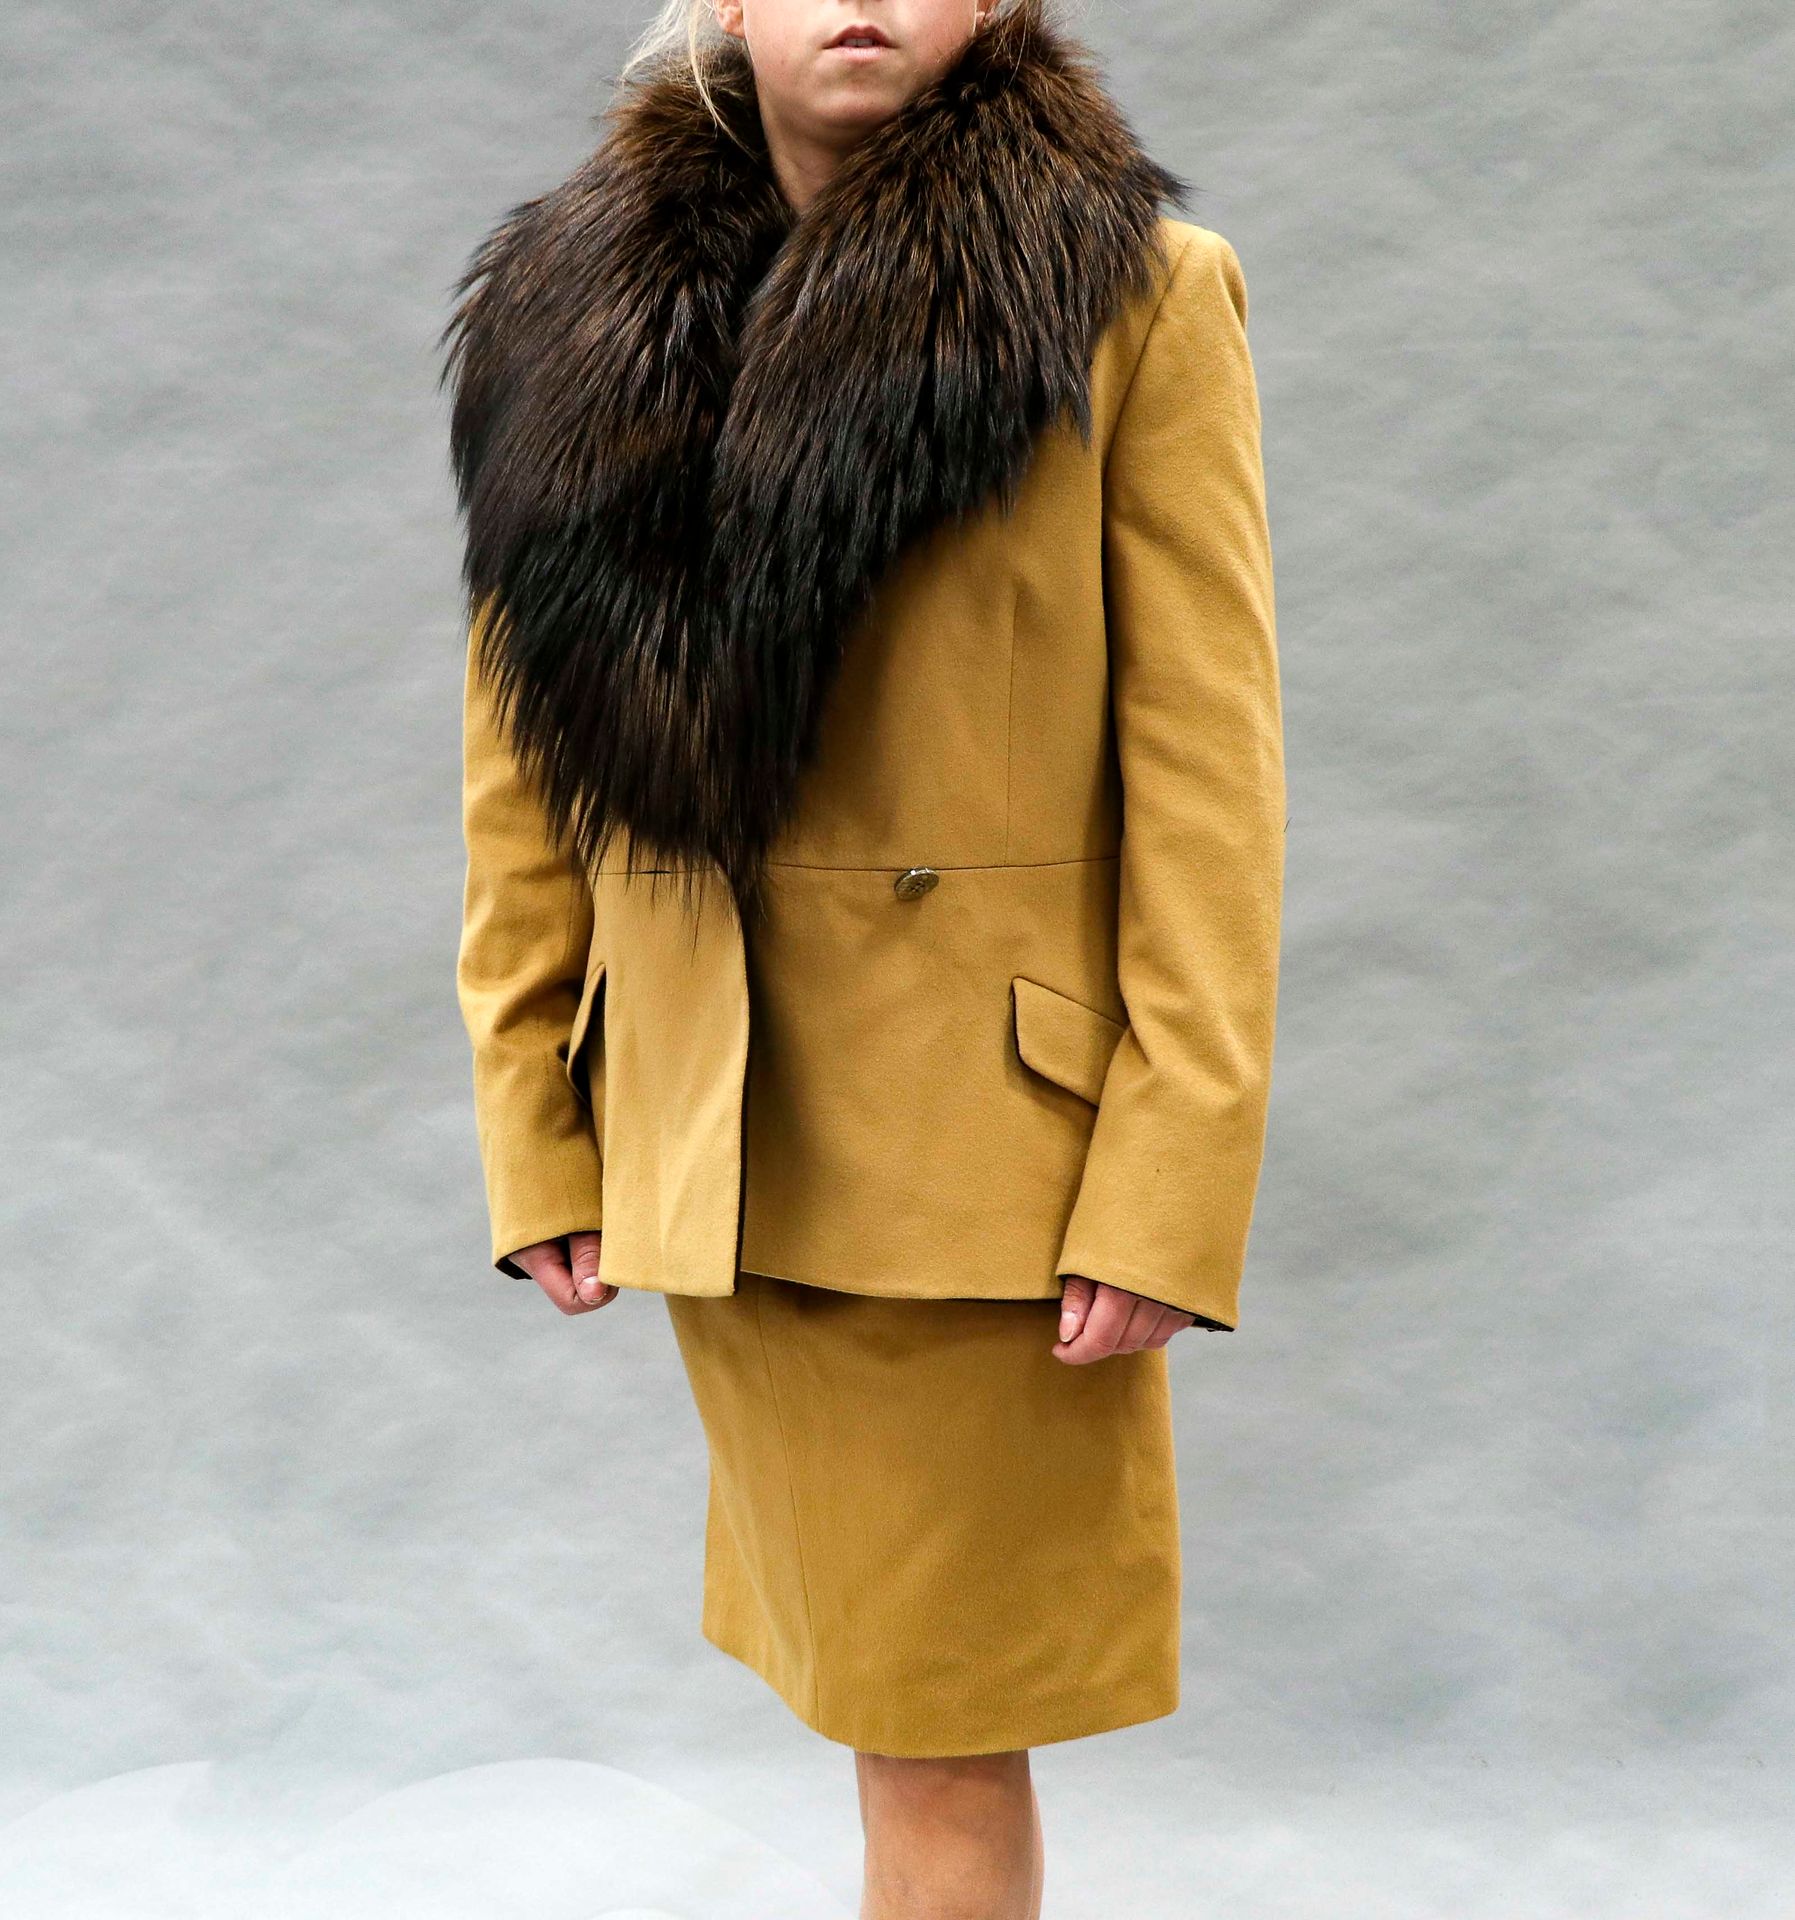 Null DOLCE GABBANA.驼色羊毛和毛皮短裙套装。S 38/40 (标记为46意大利语)